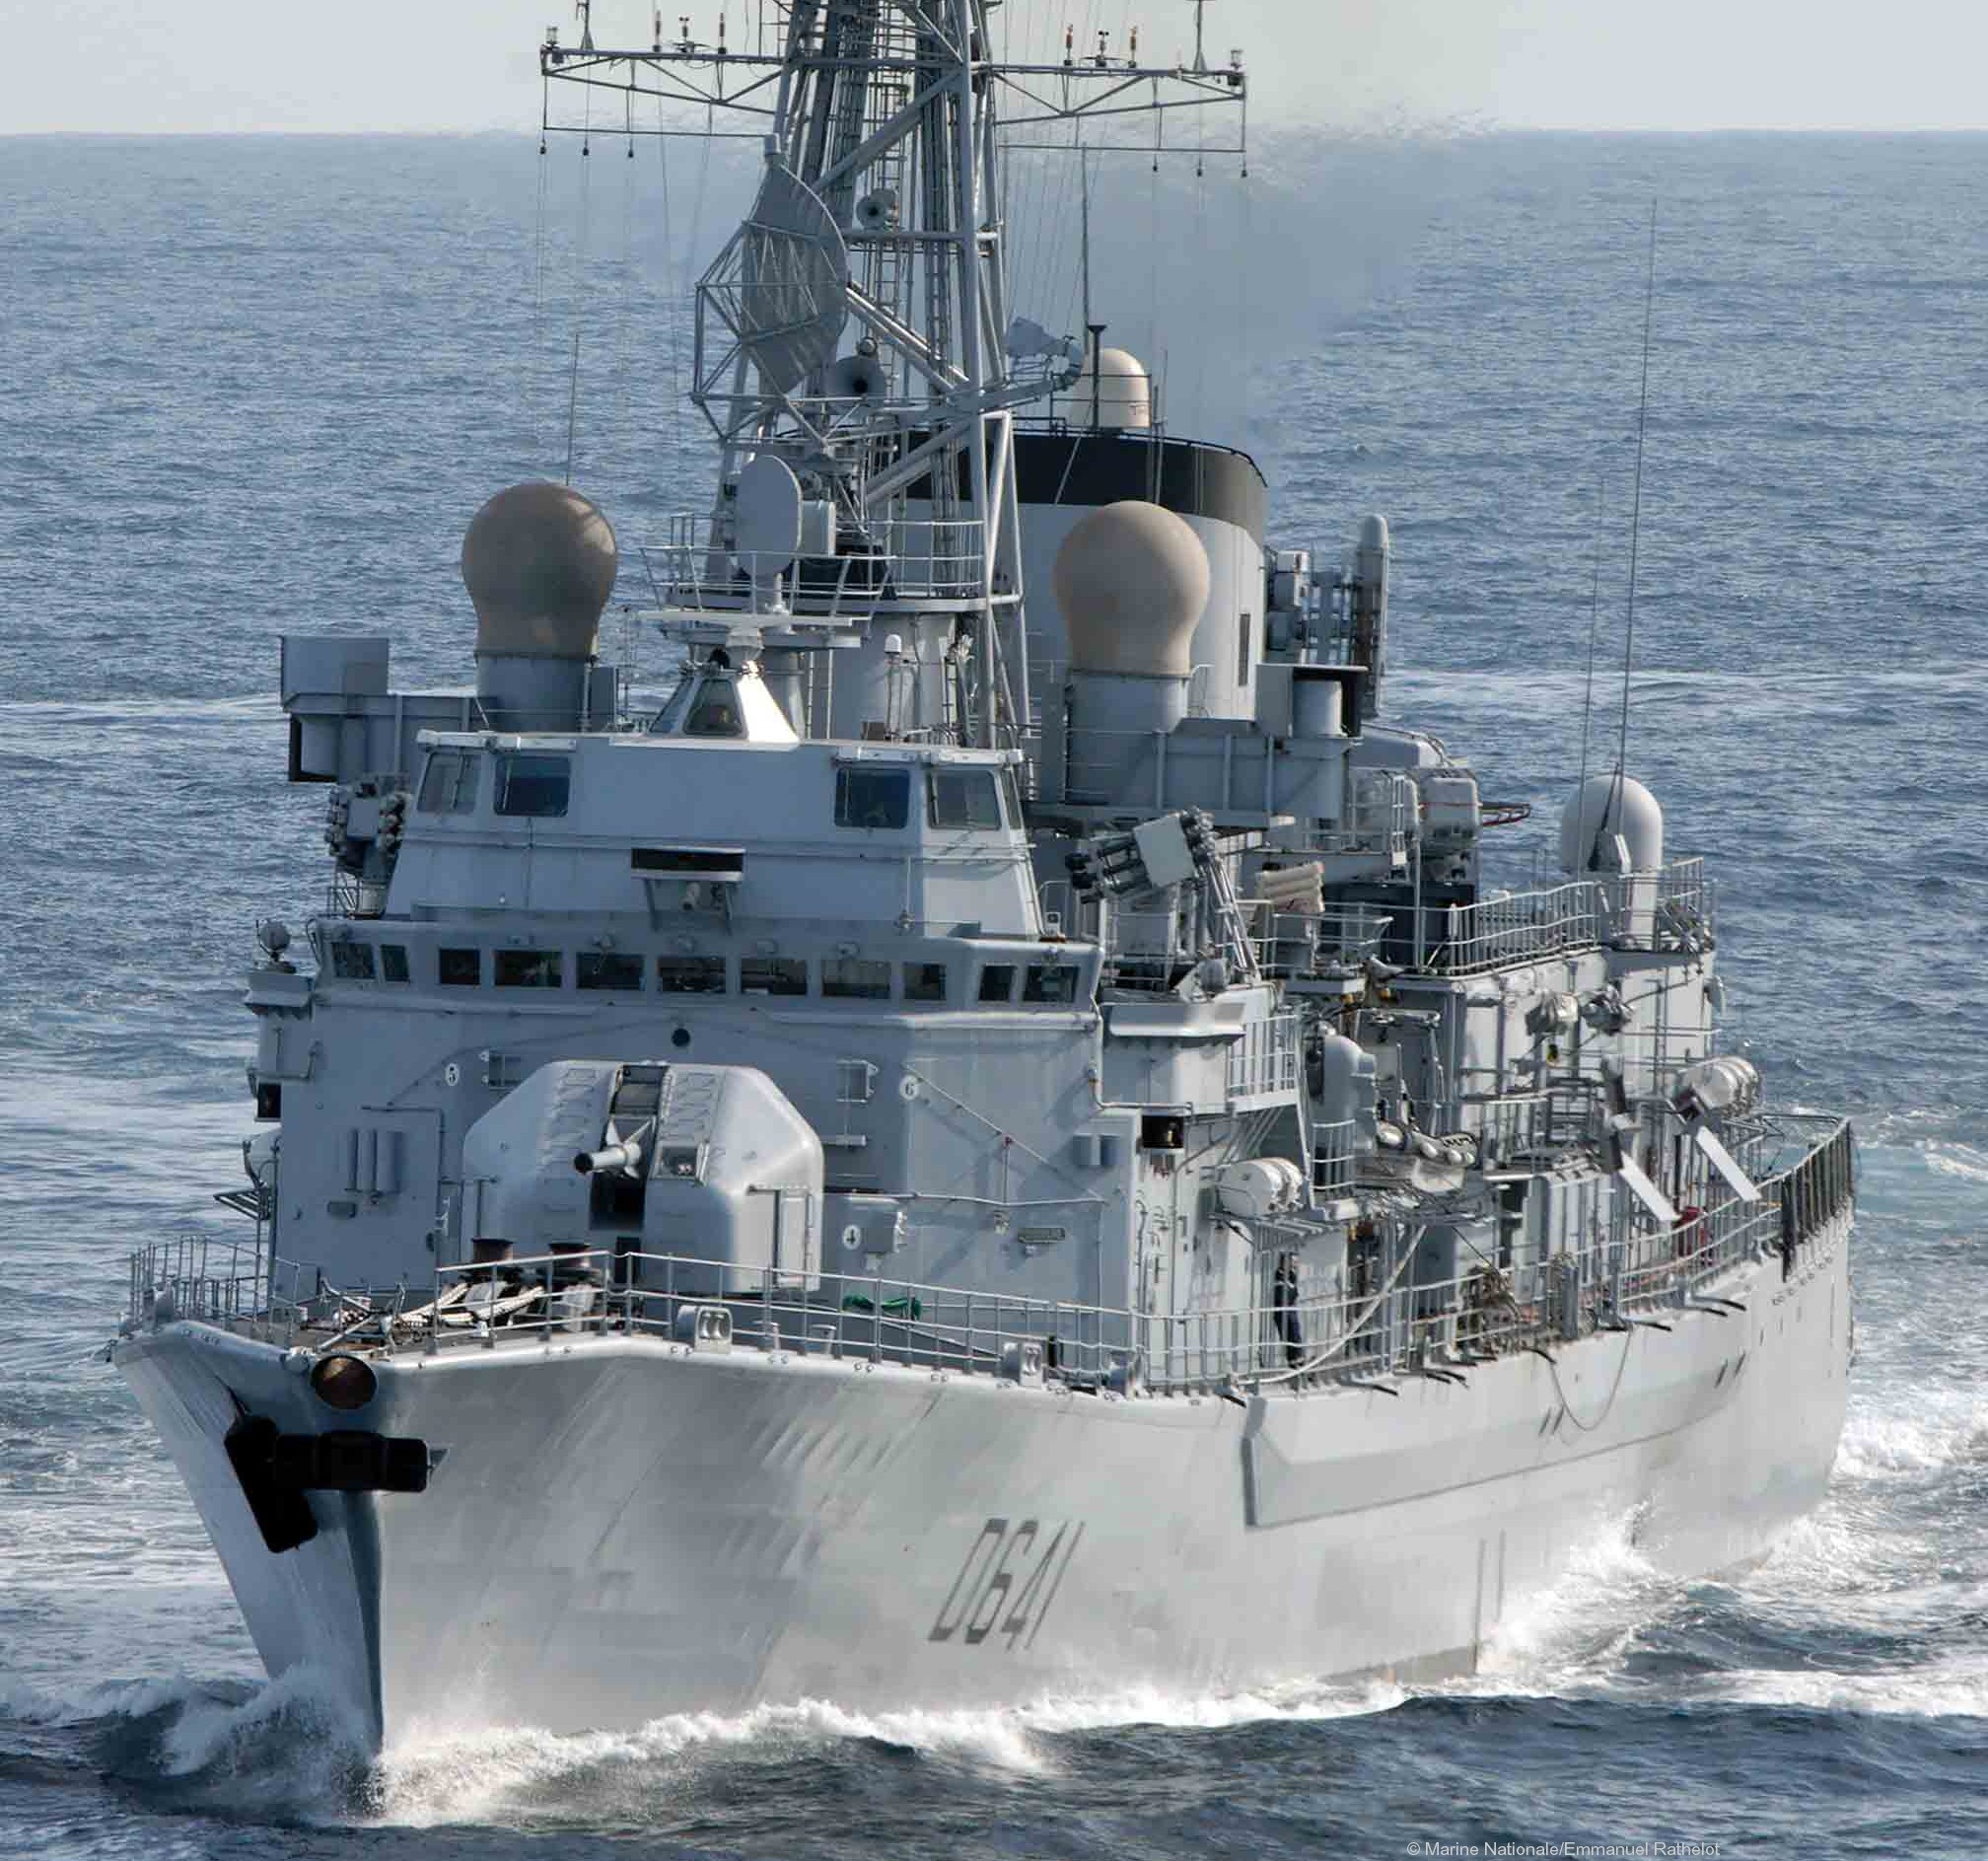 d-641 fs dupleix f70as anti submarine frigate destroyer french navy marine nationale 11